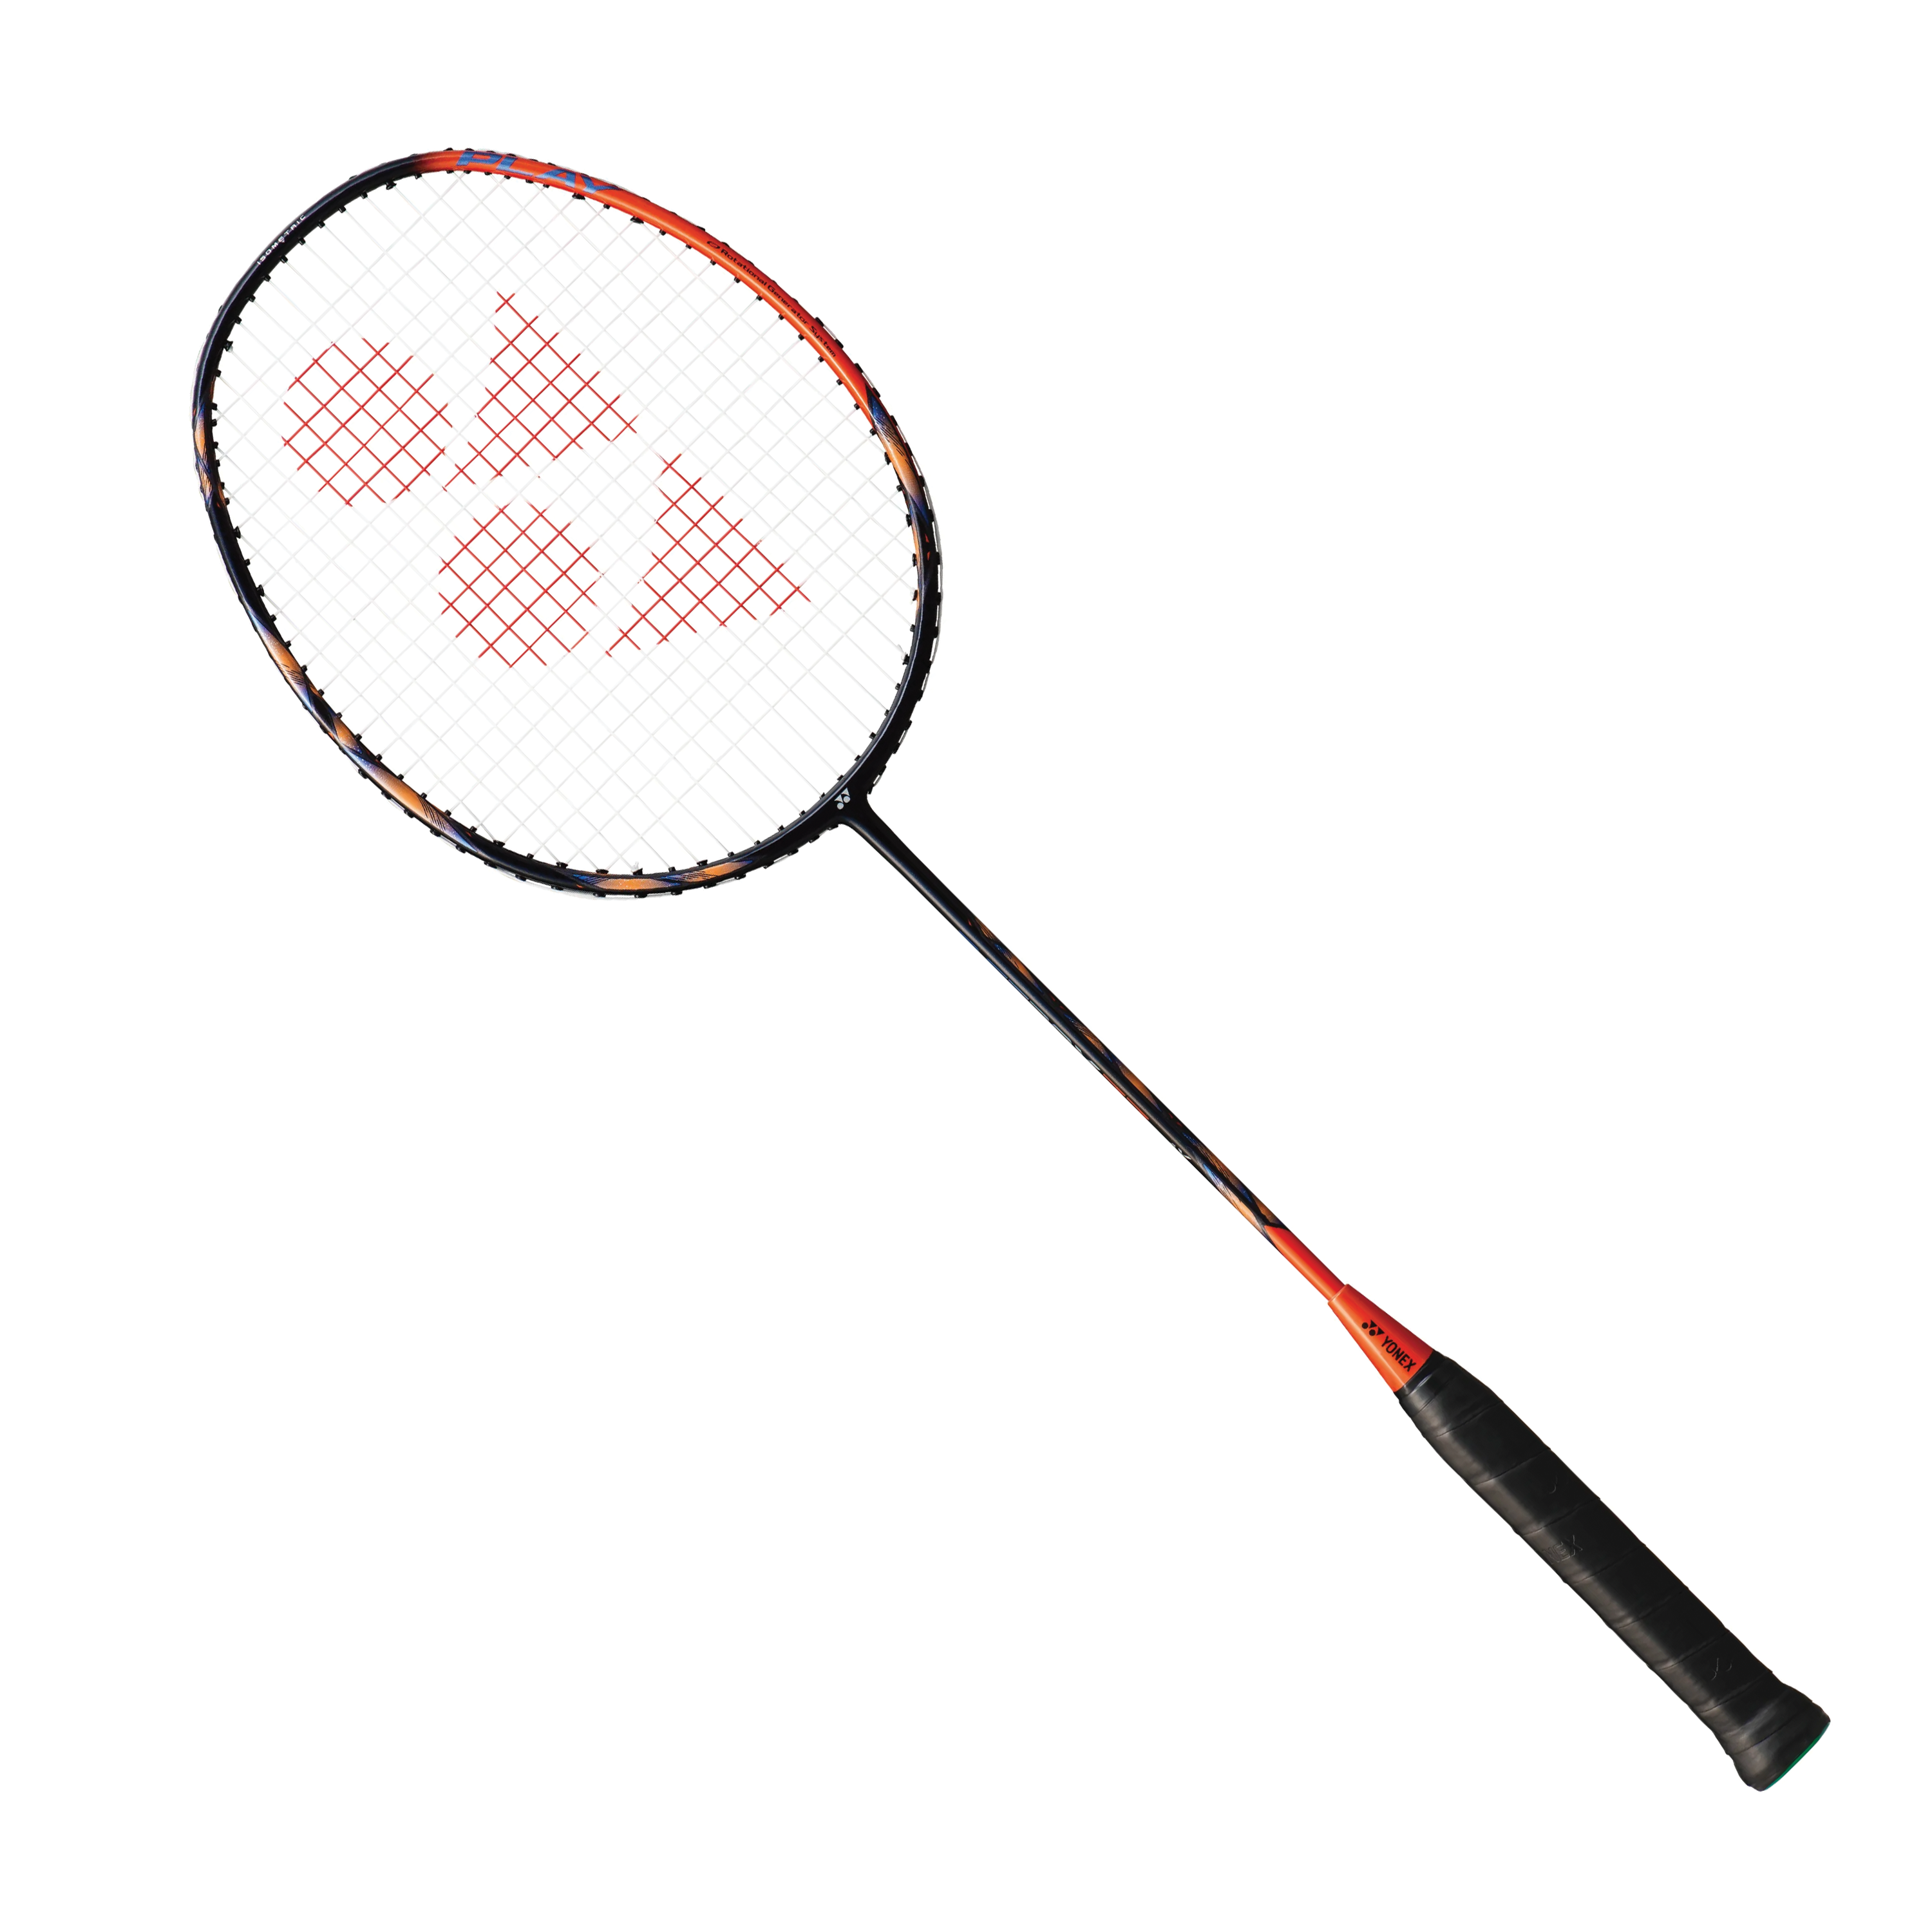 YONEX Astrox 77 Play Badminton Racquet High Orange 4U(83g)G6 (Ready to Go)